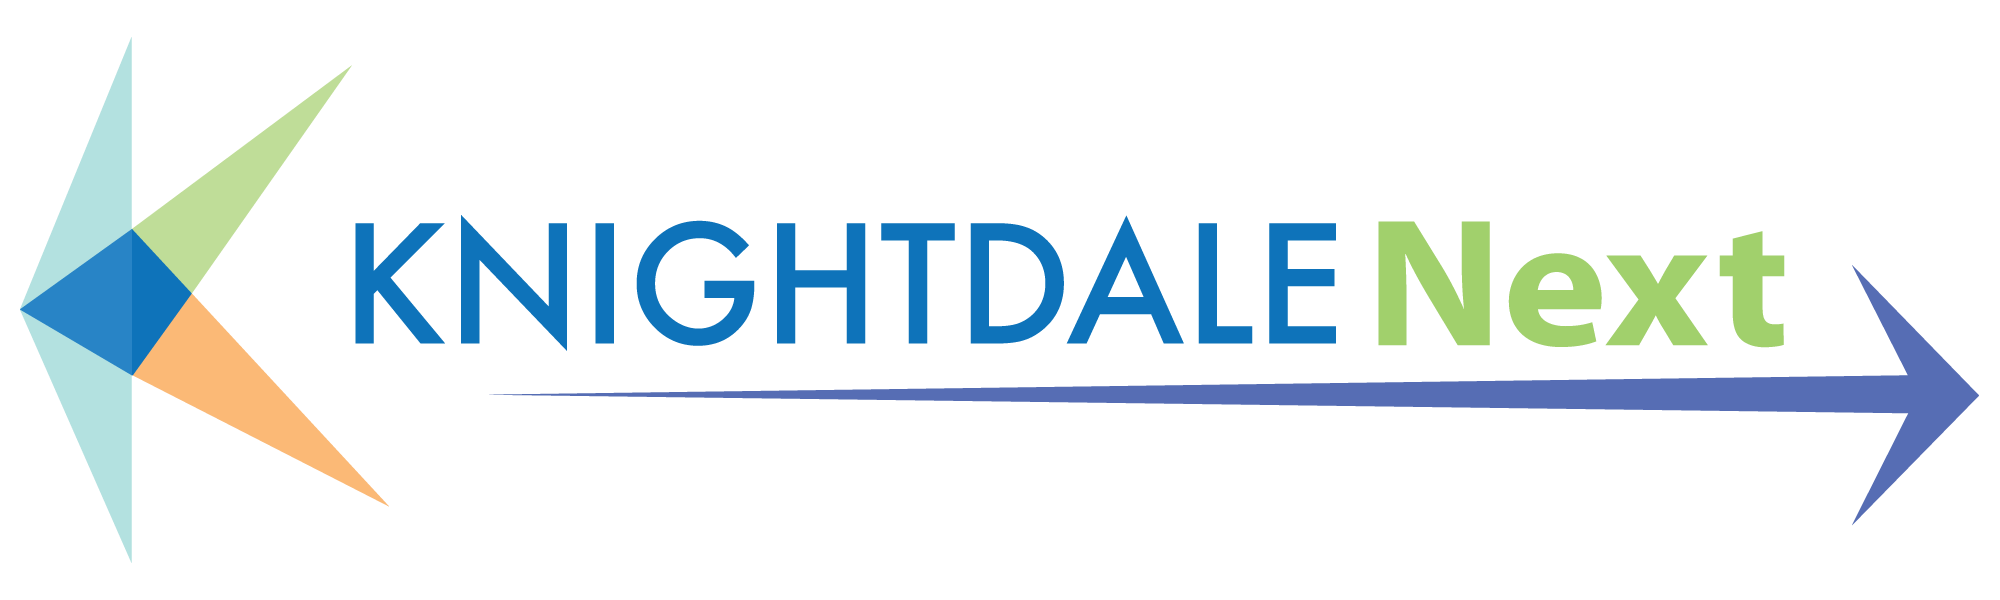 Knightdale Next Logo